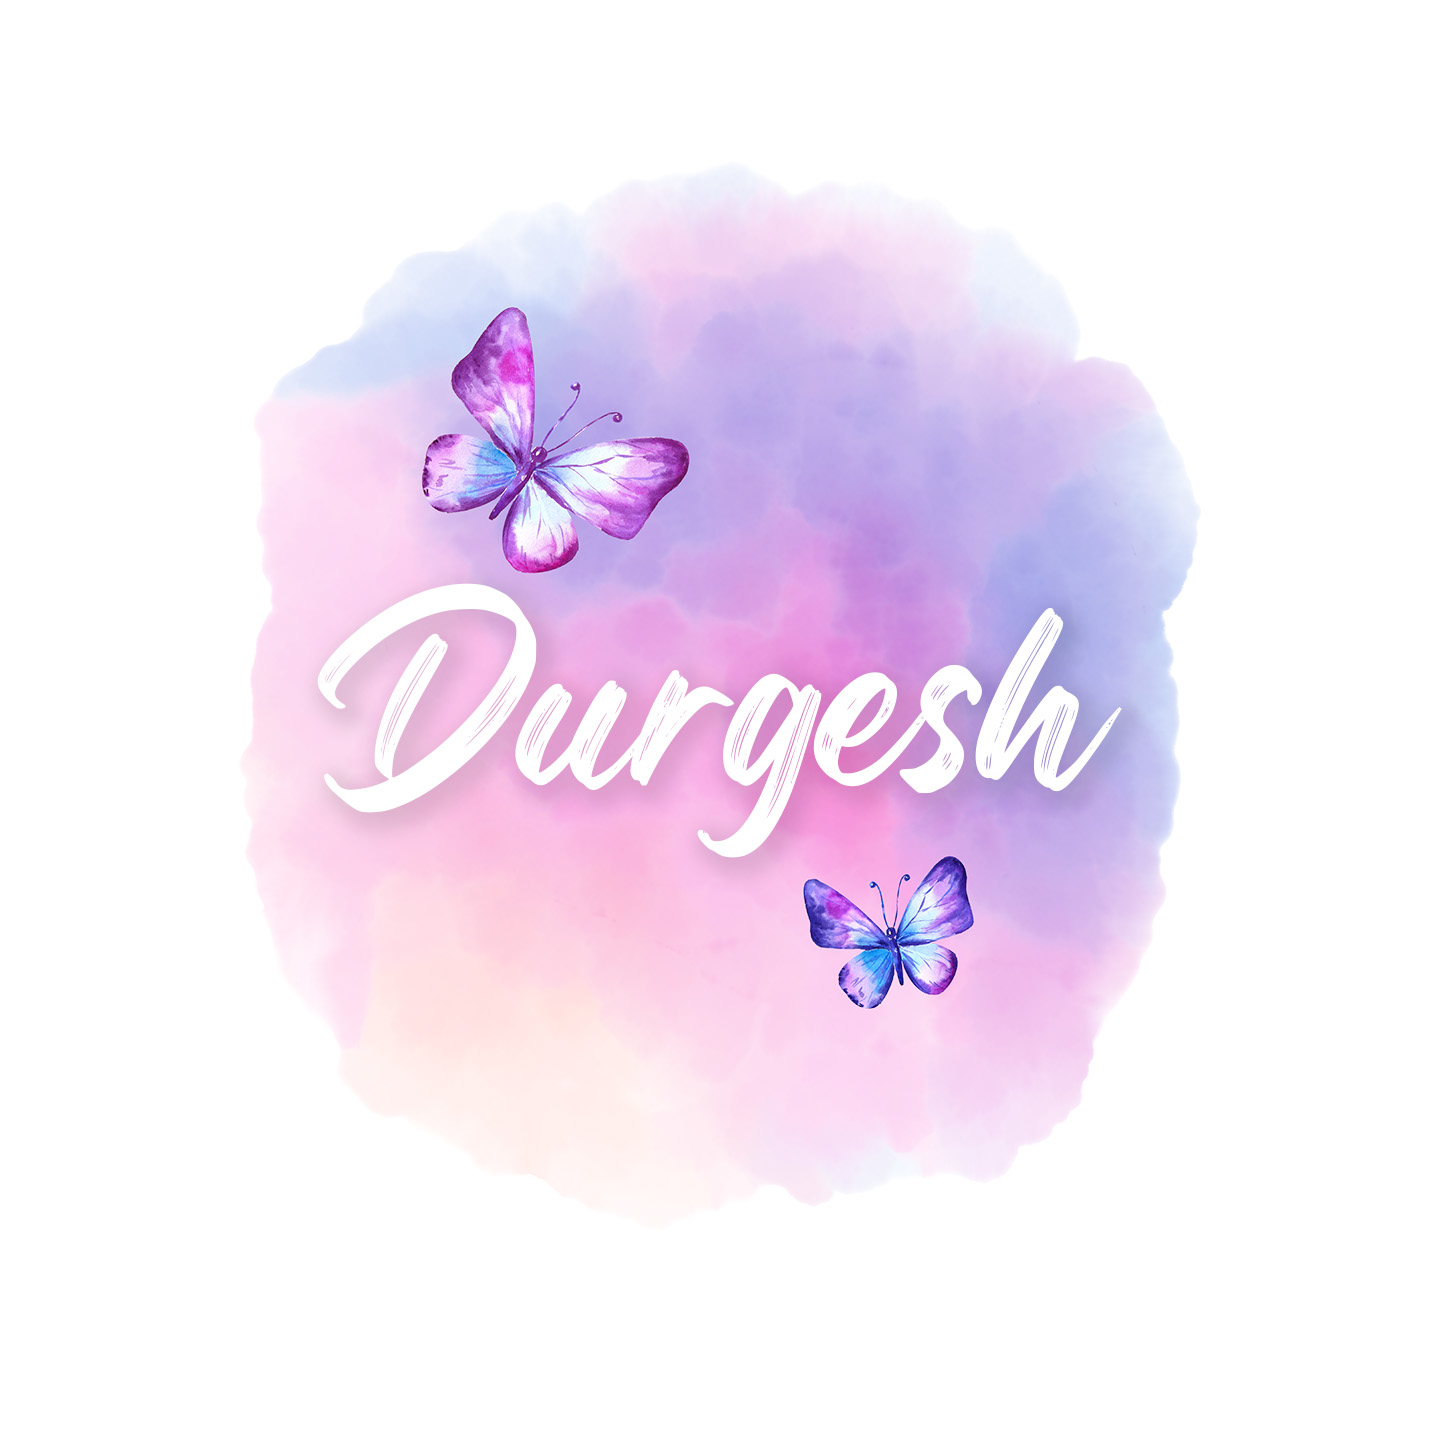 Durgesh Maladhare (Durgesh Maladhare) Quotes | YourQuote